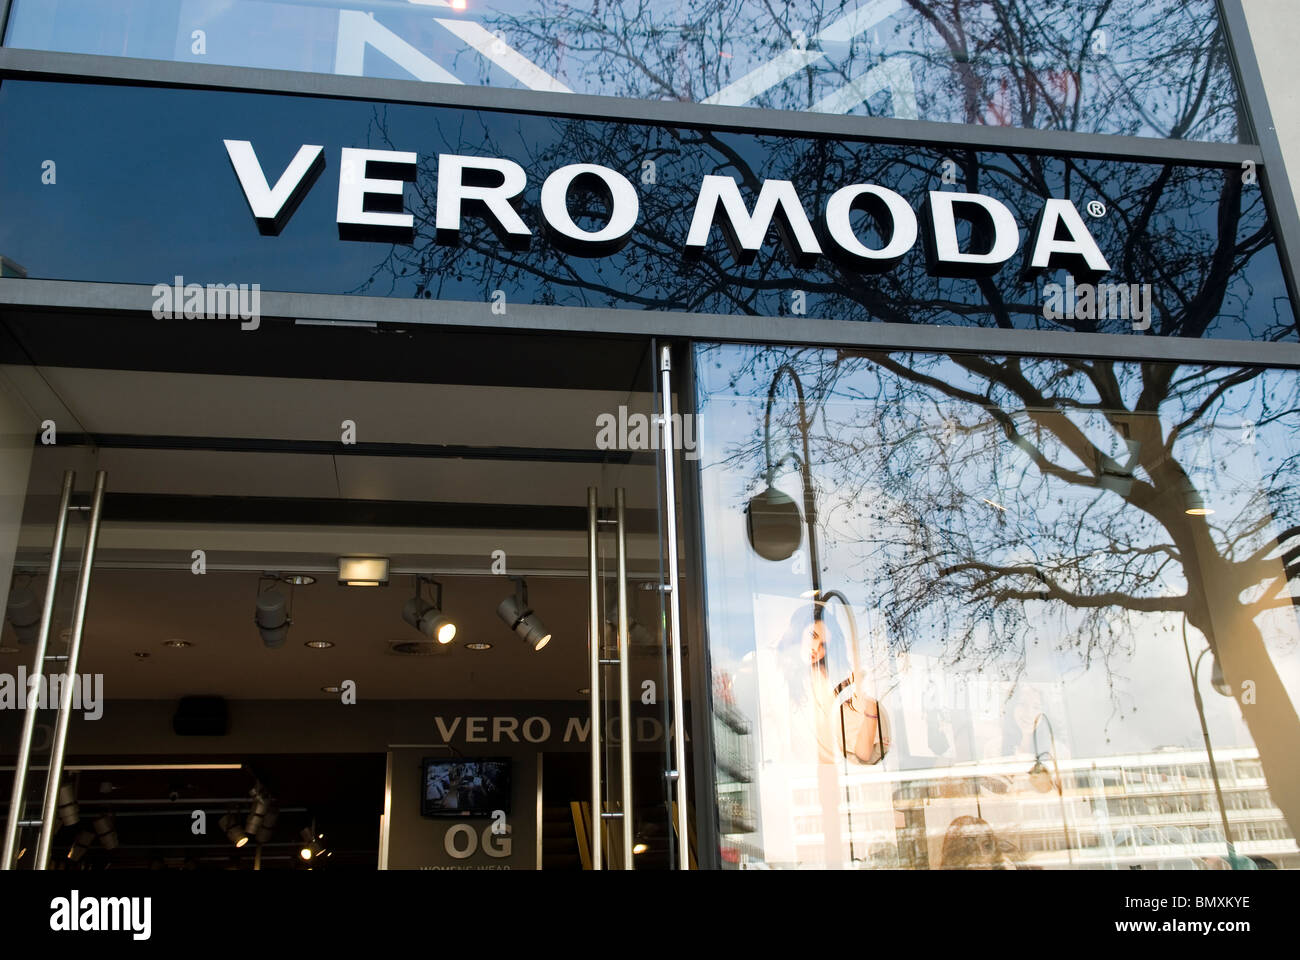 Vero Moda clothing fashion store sign Berlin Germany Stock Photo - Alamy